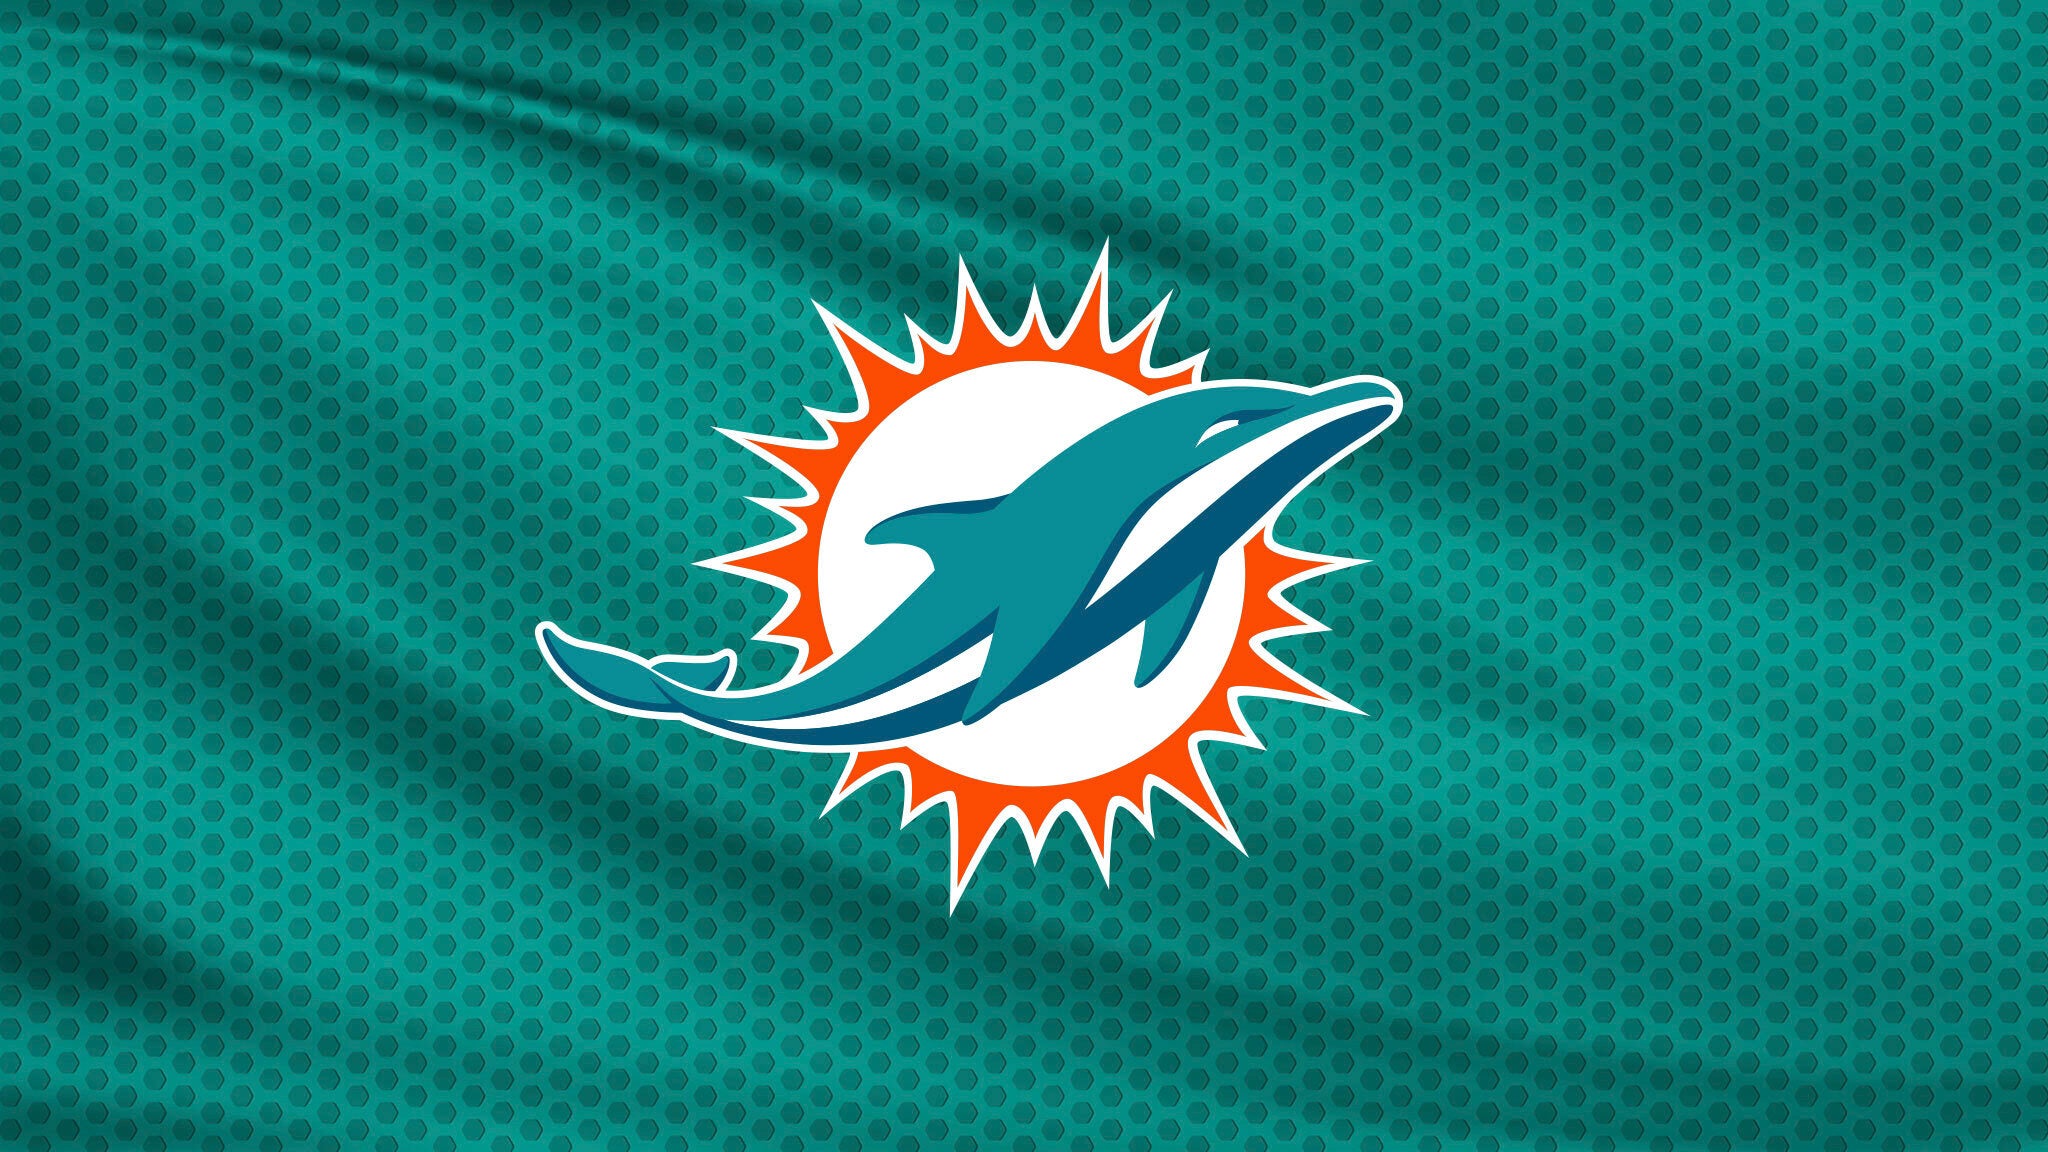 Miami Dolphins v Jacksonville Jaguars hero